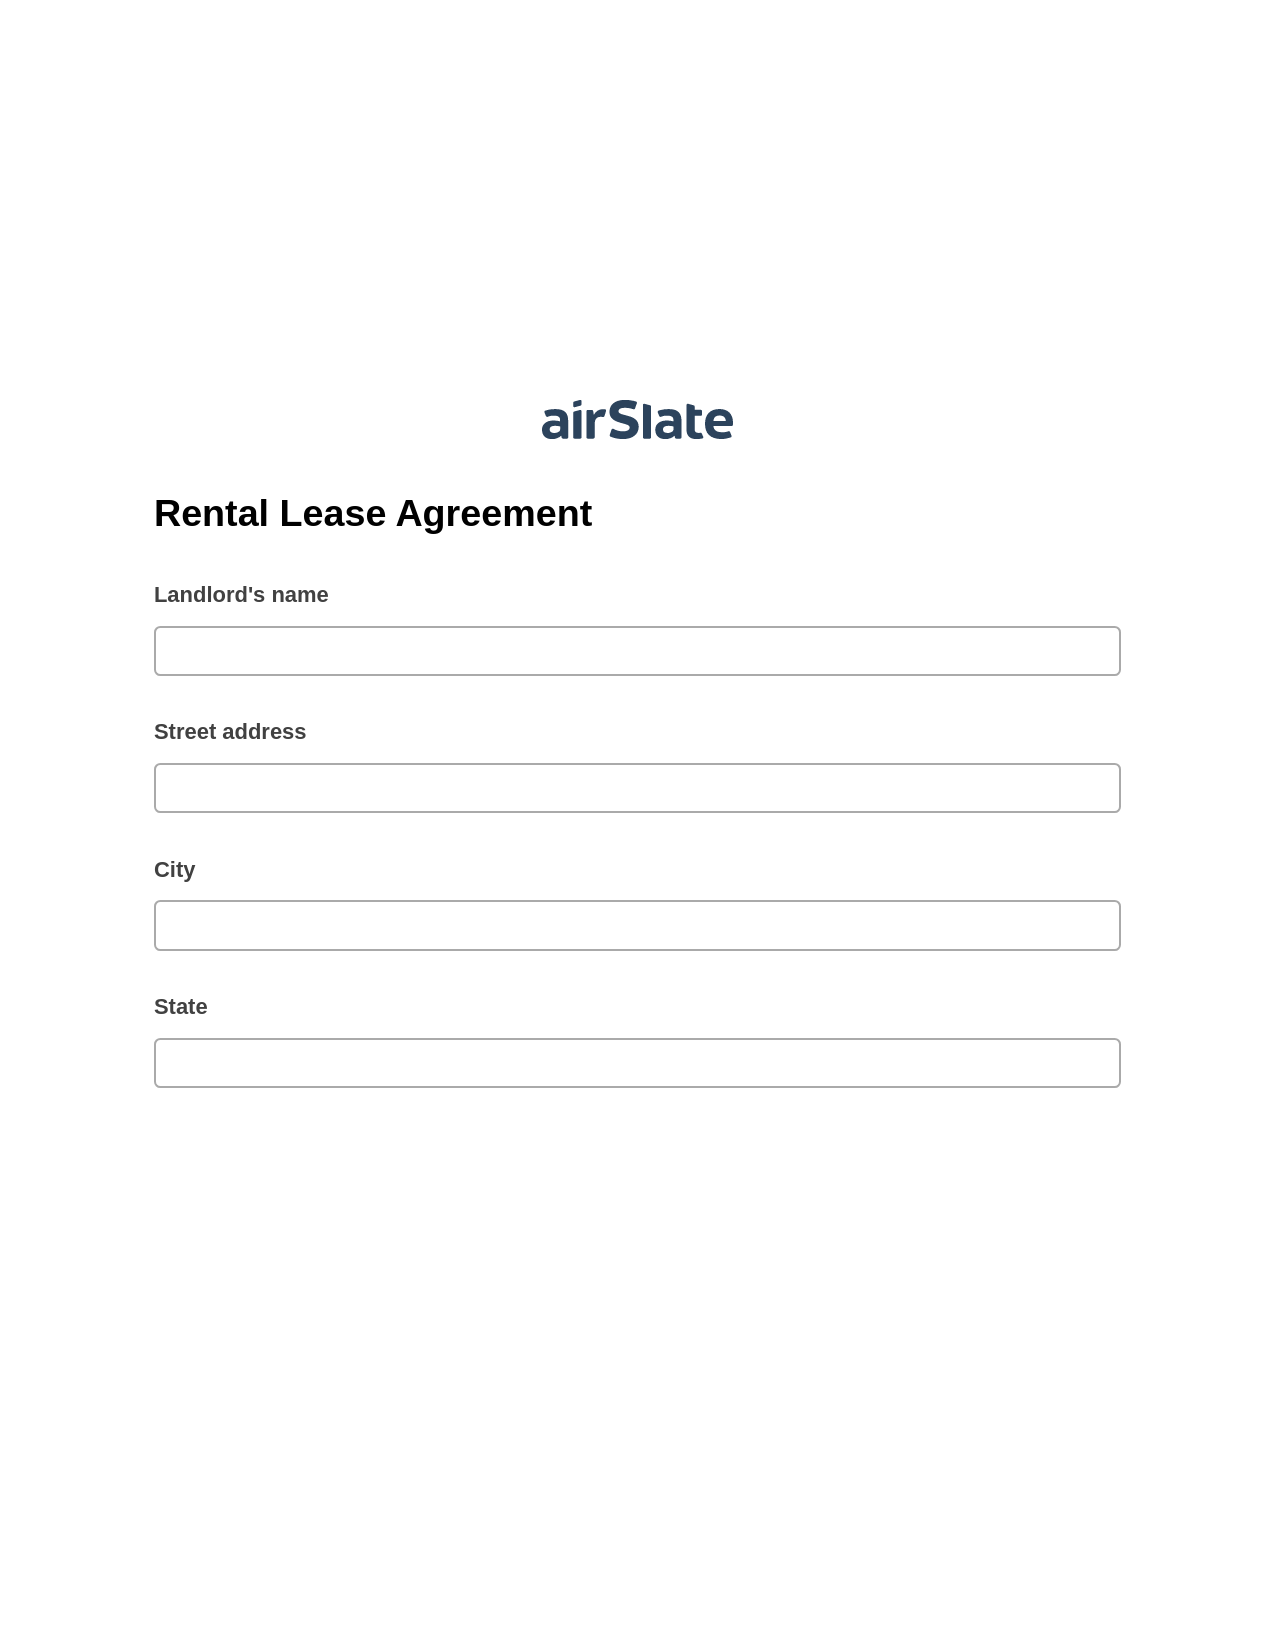 Multirole Rental Lease Agreement Pre-fill from Google Sheet Dropdown Options Bot, Lock the slate bot, Post-finish Document Bot